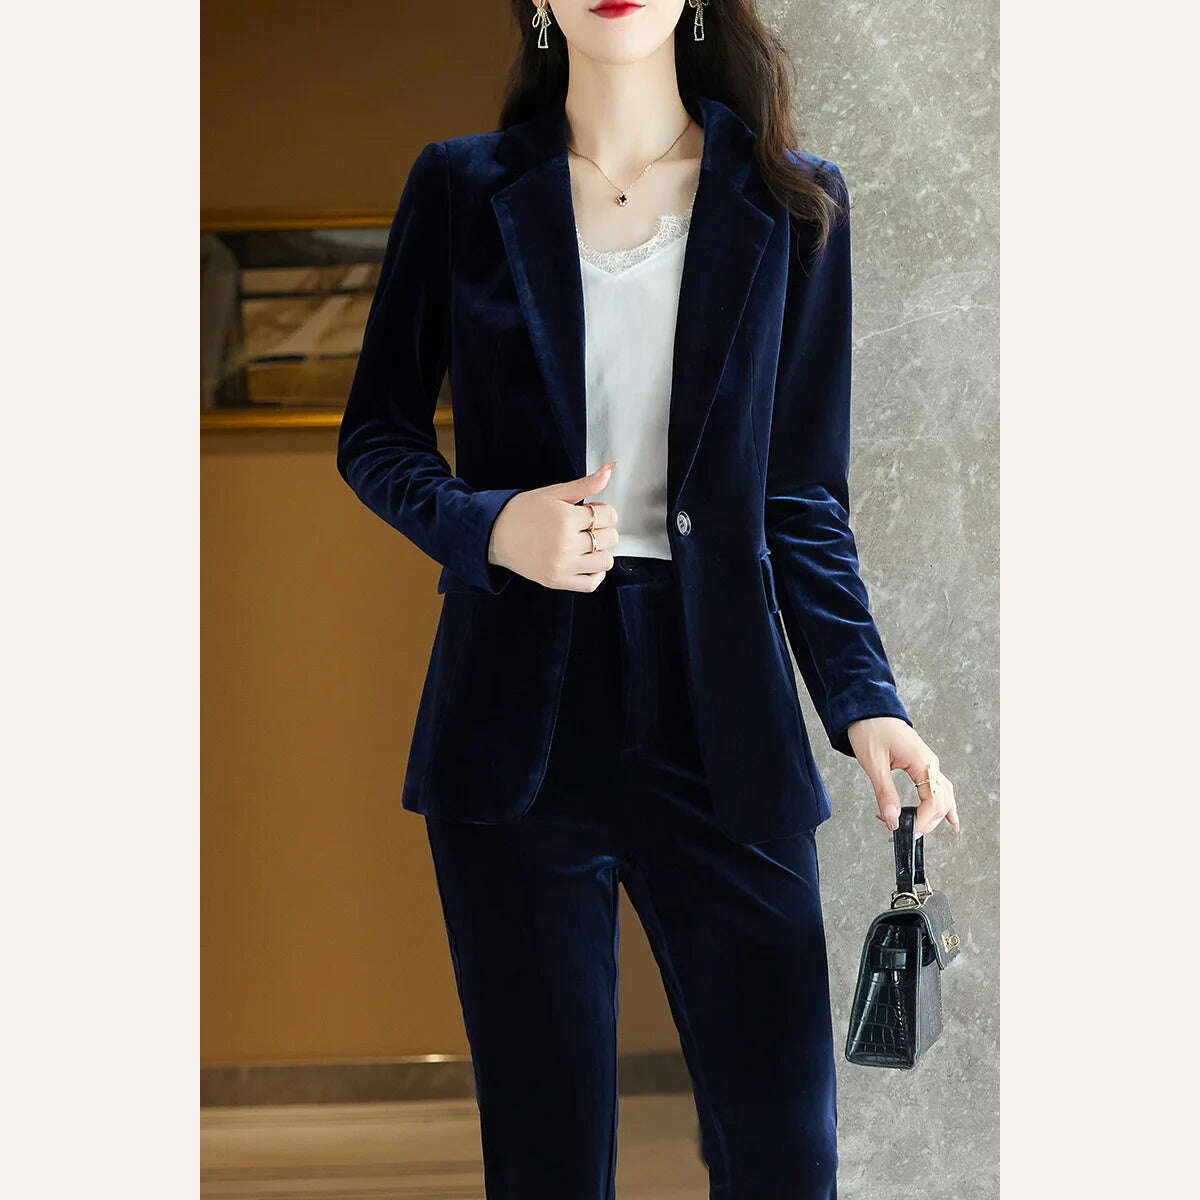 KIMLUD, Korean High-Quality Velvet Autumn Winter Formal Ladies Blazer Business Suits with Sets Work Wear Office Uniform Pants Jacket, Blue blazer  pants / S / China, KIMLUD Women's Clothes